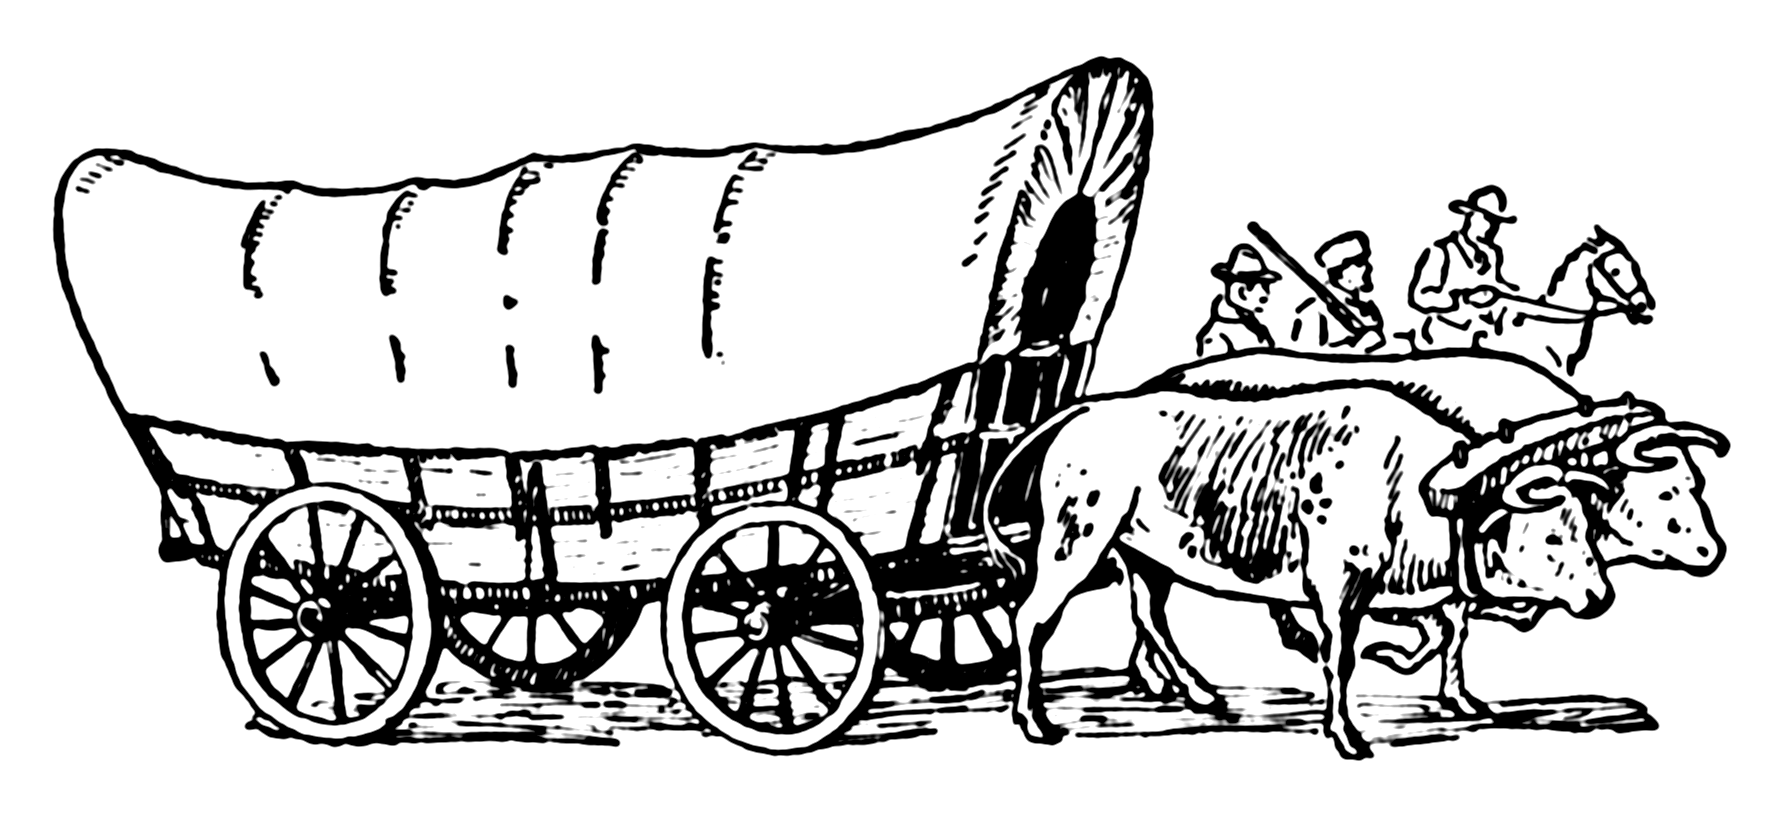 Oregon trail wagons clipart